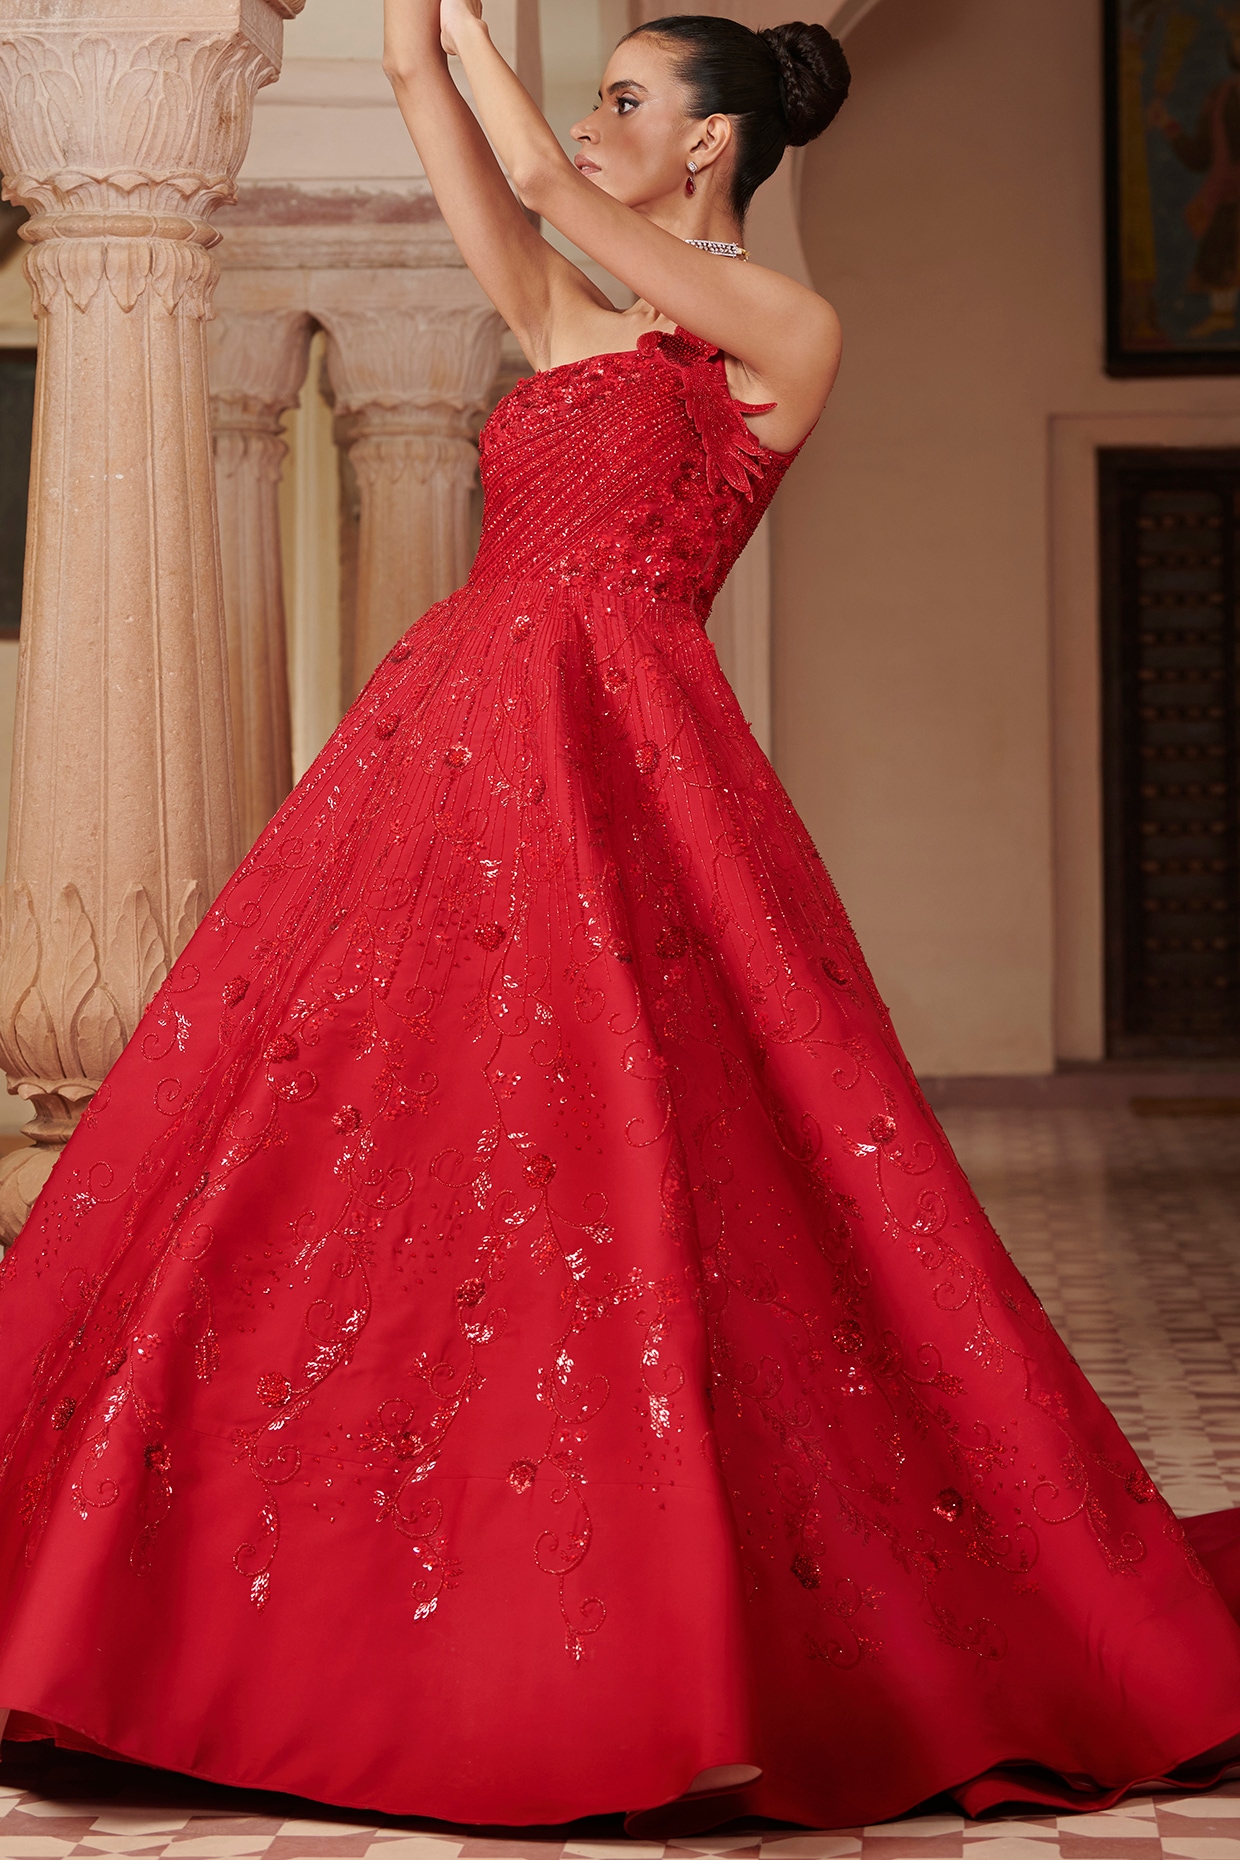 Red Wedding Dresses: 18 Lovely Options For Brides | Red wedding dresses, Red  wedding gowns, Colored wedding dresses